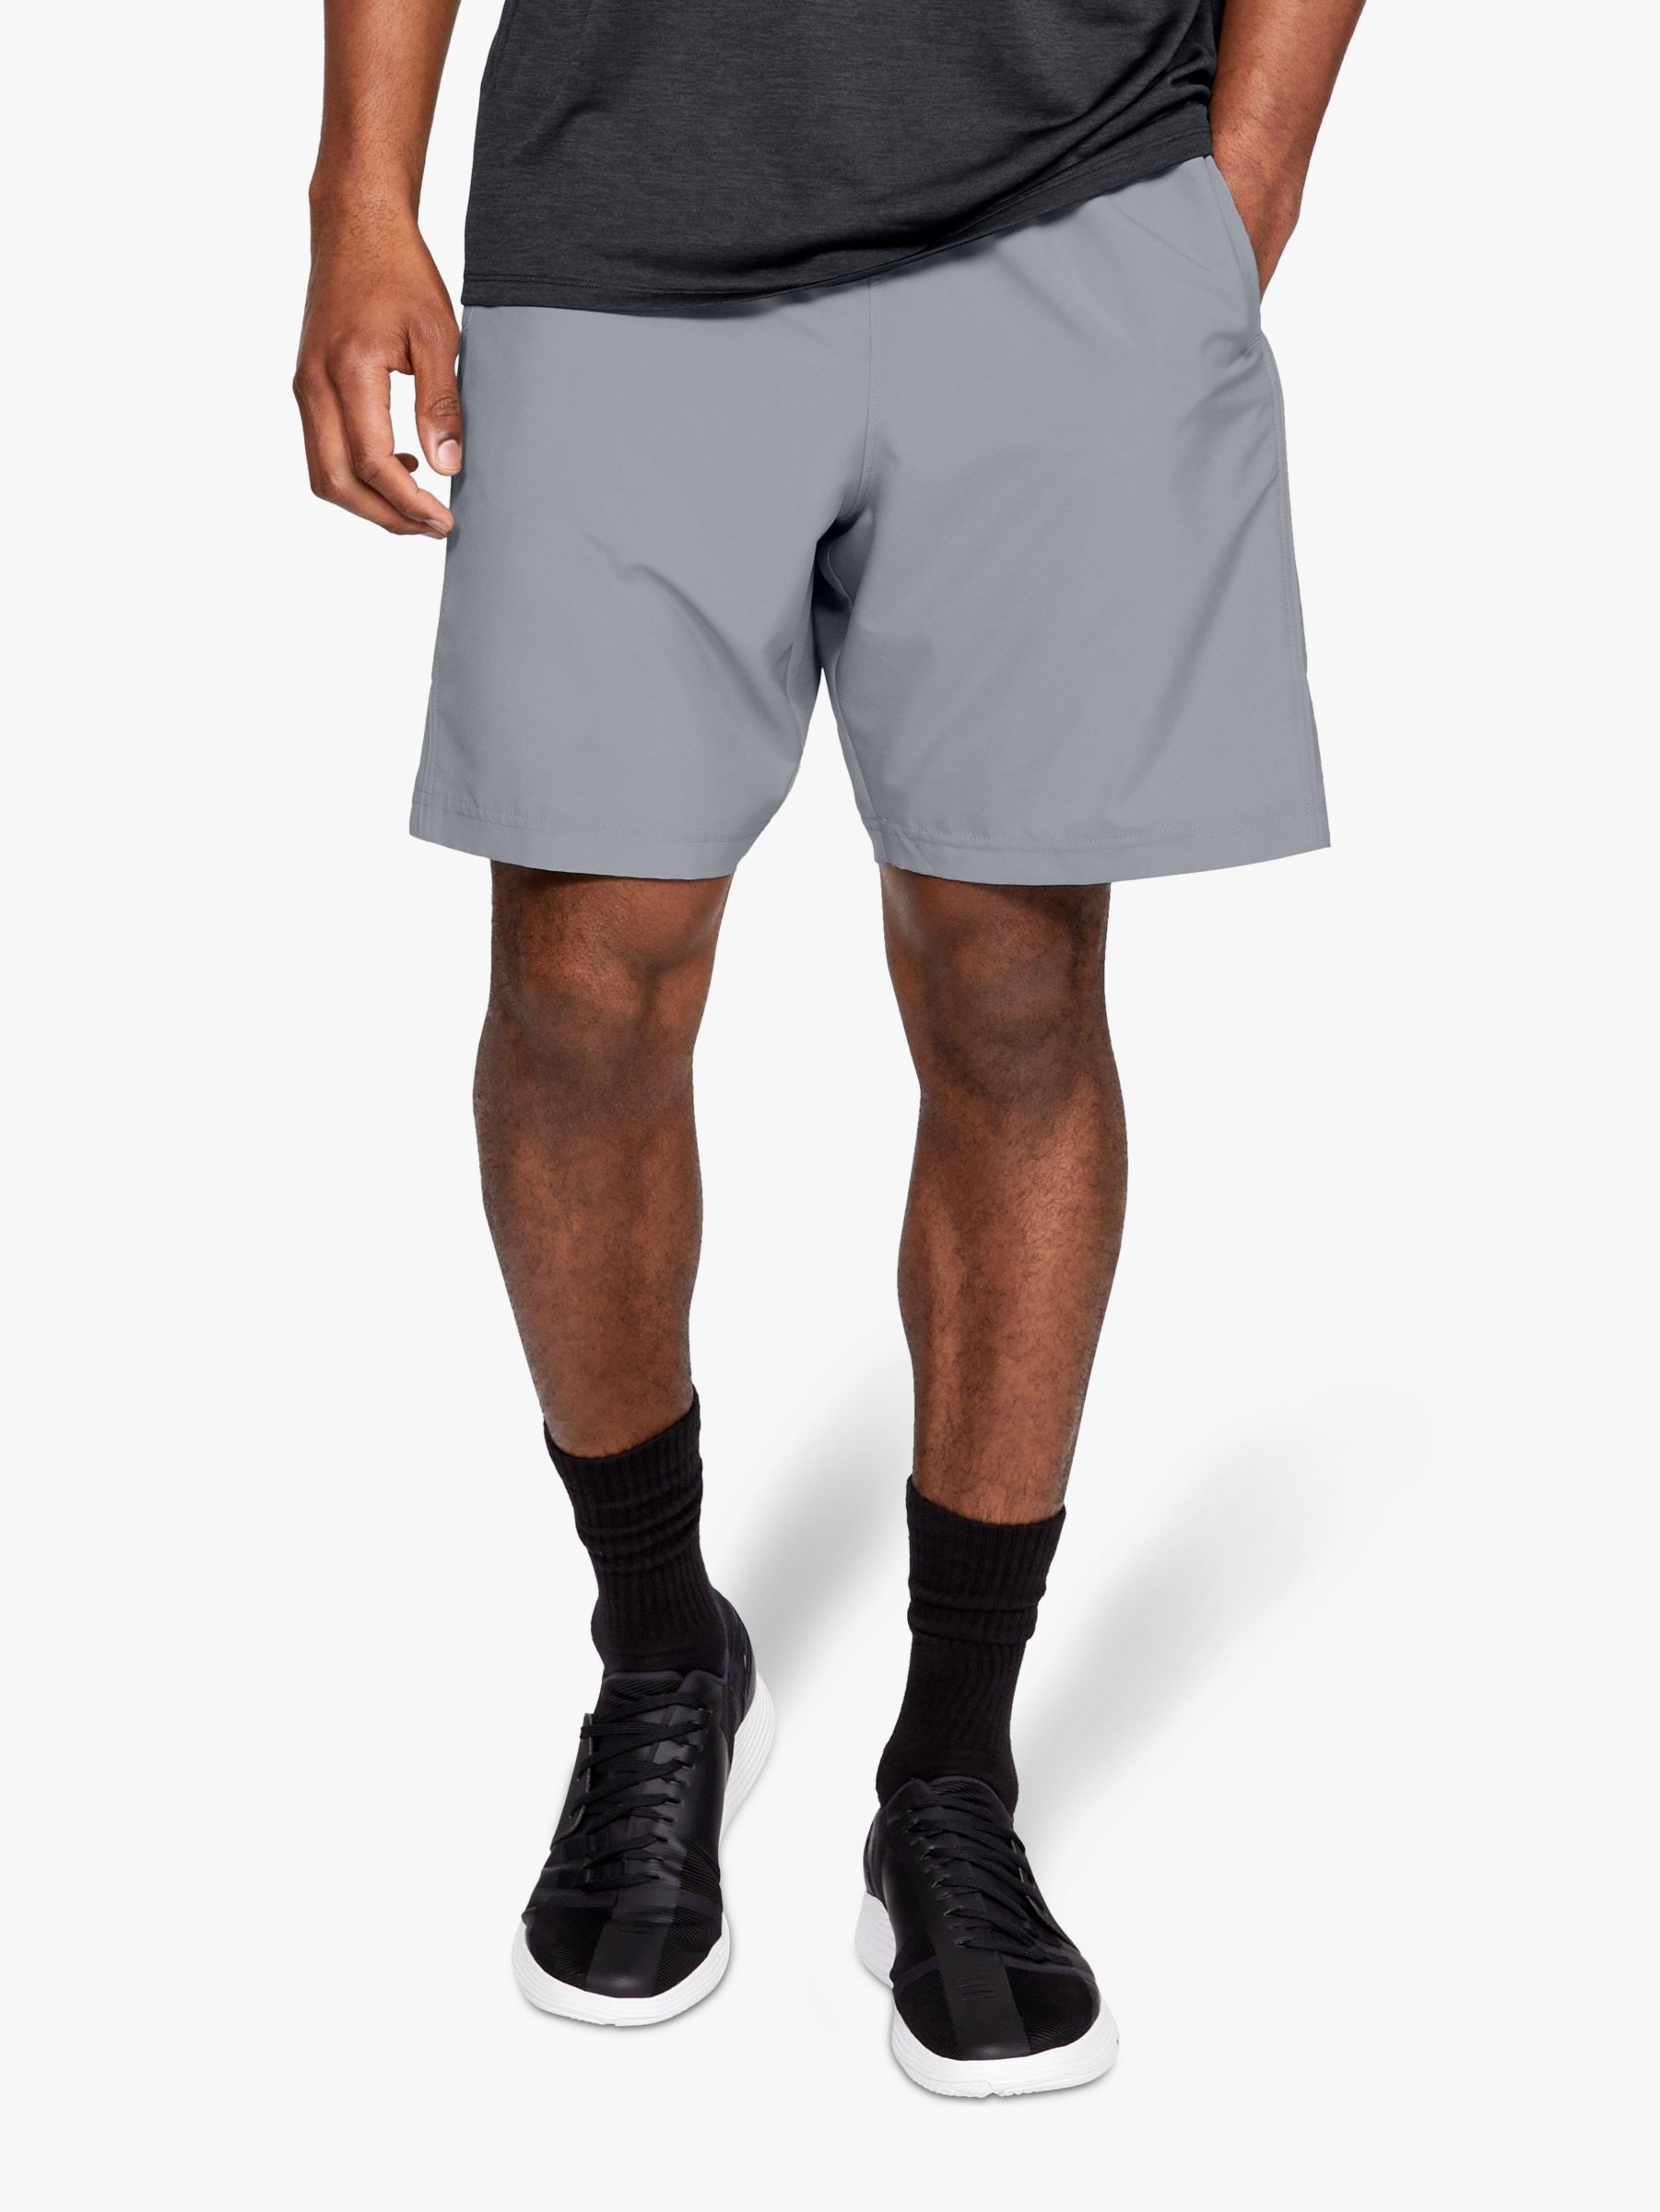 black under armor shorts